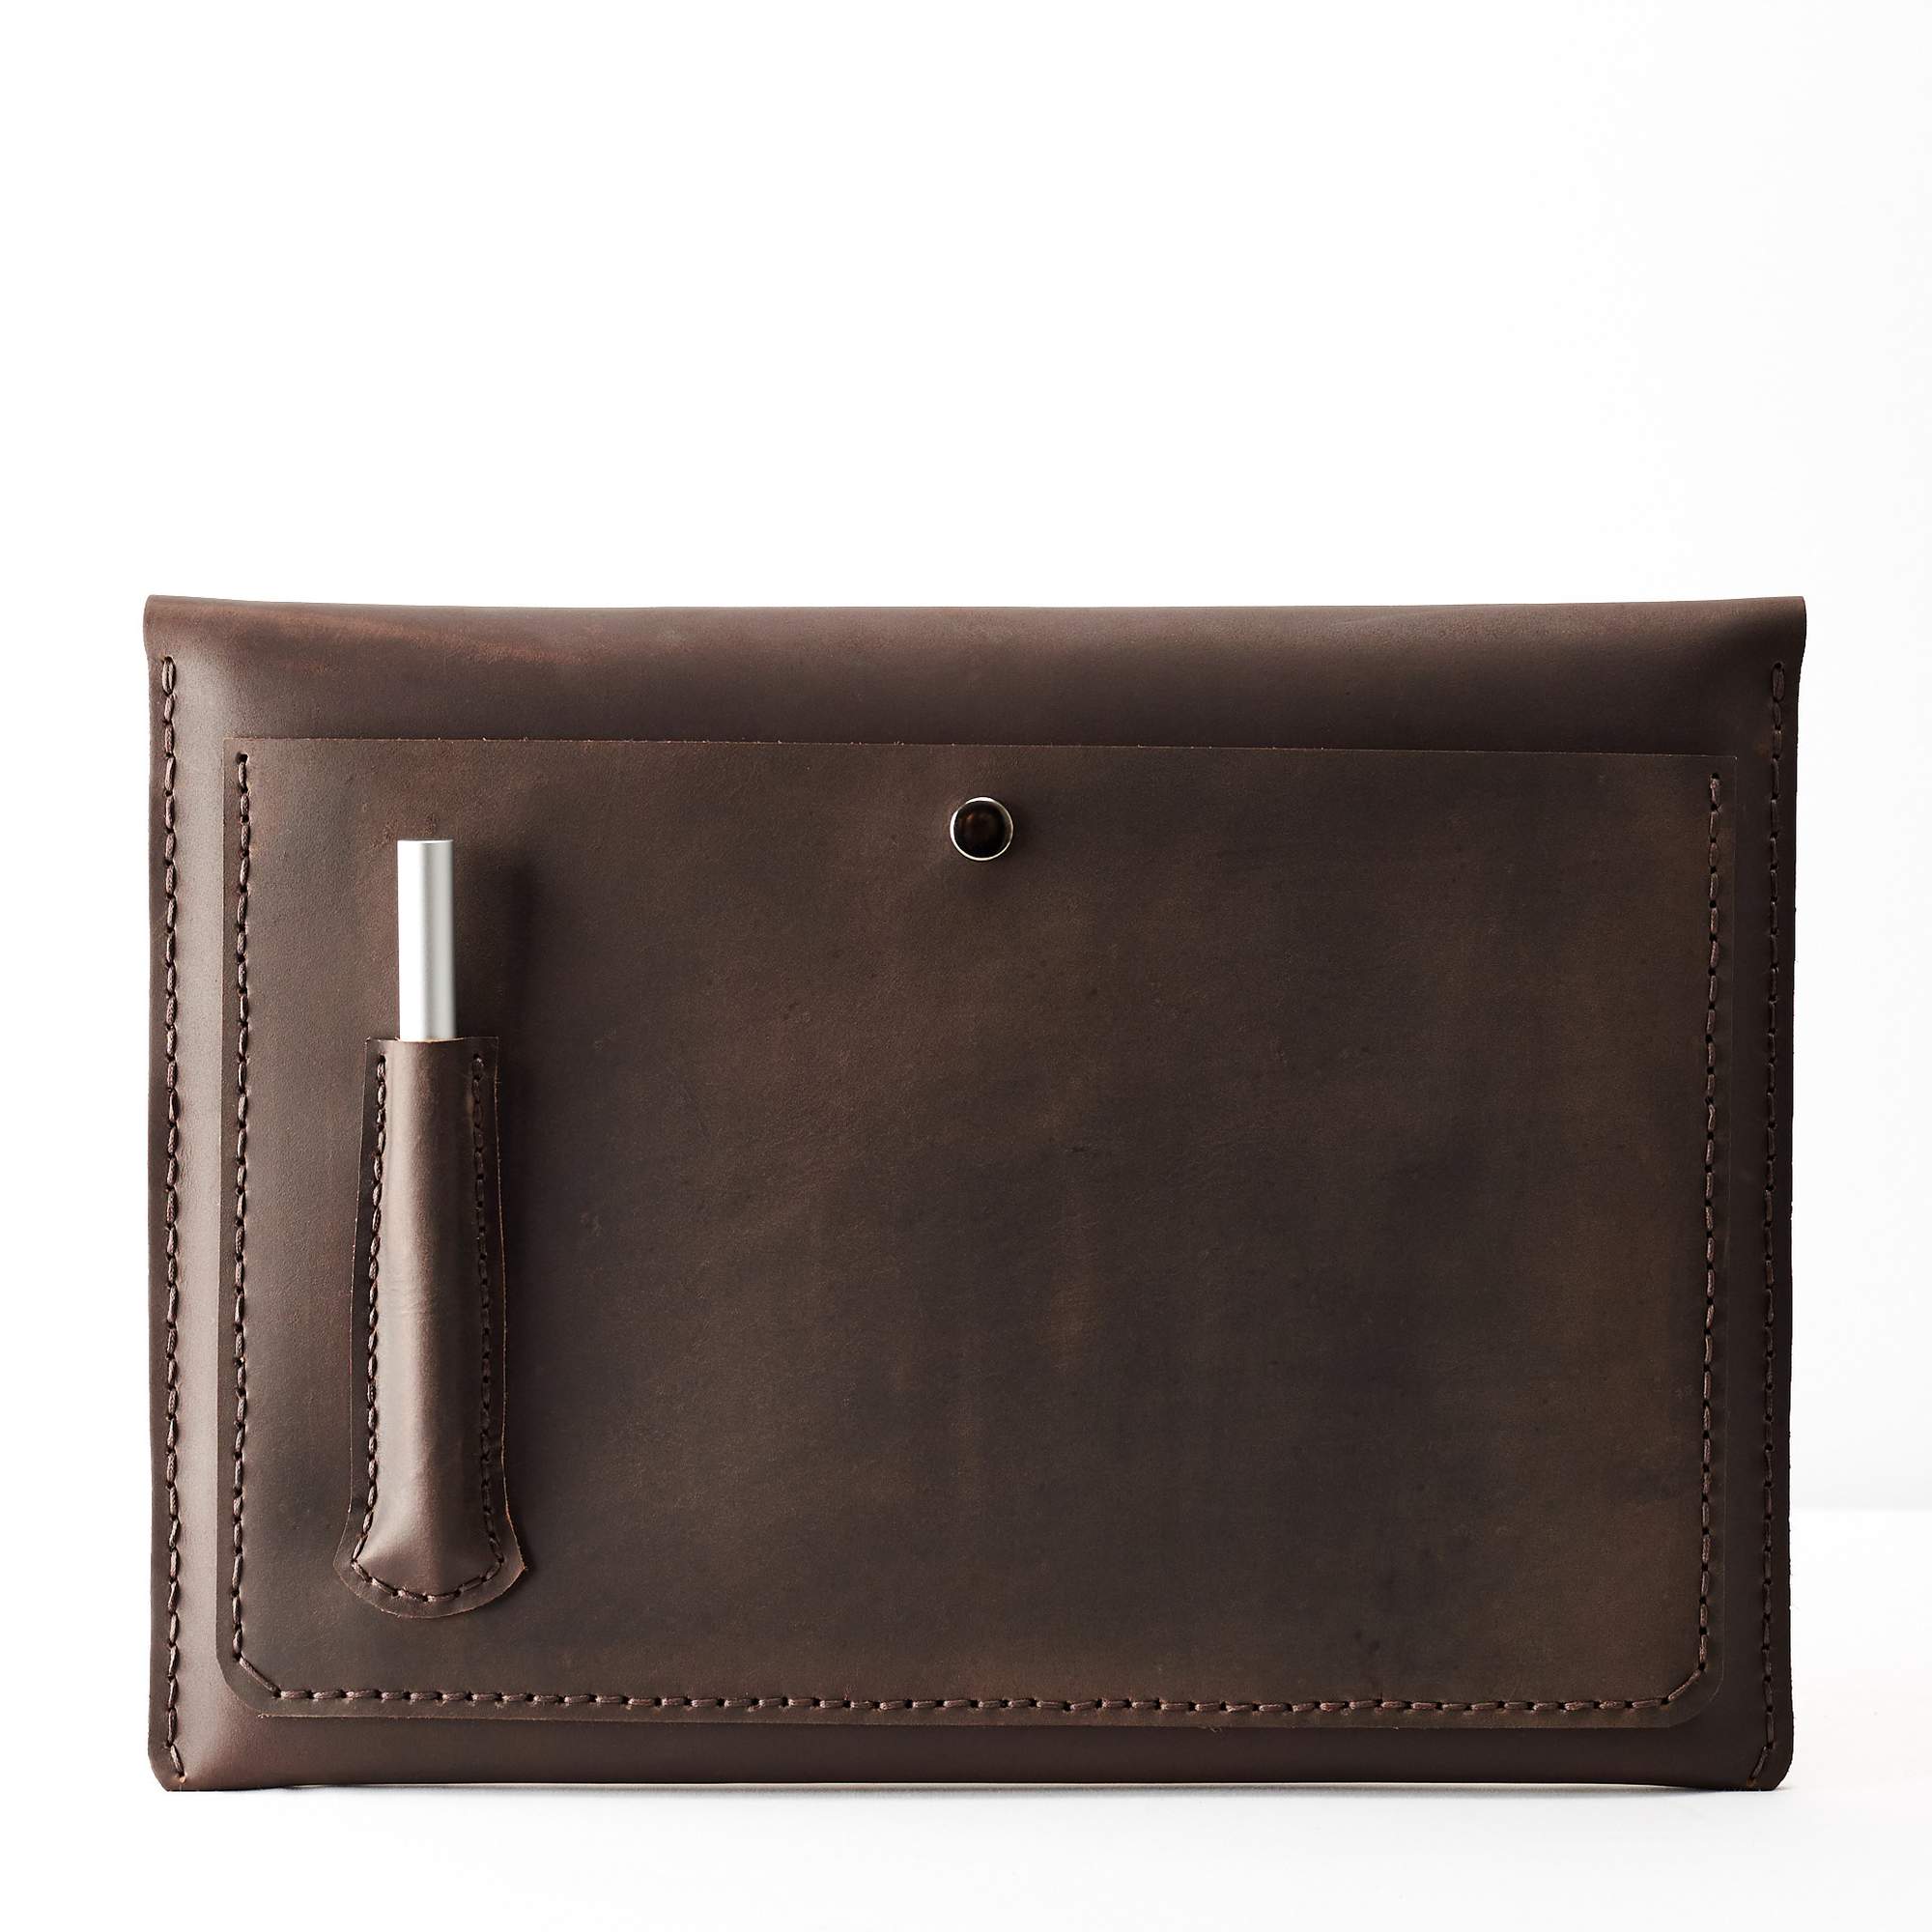 Slim back pocket. Google Pixelbook brown leather case with pen holder. Pixelbook laptop mens folio